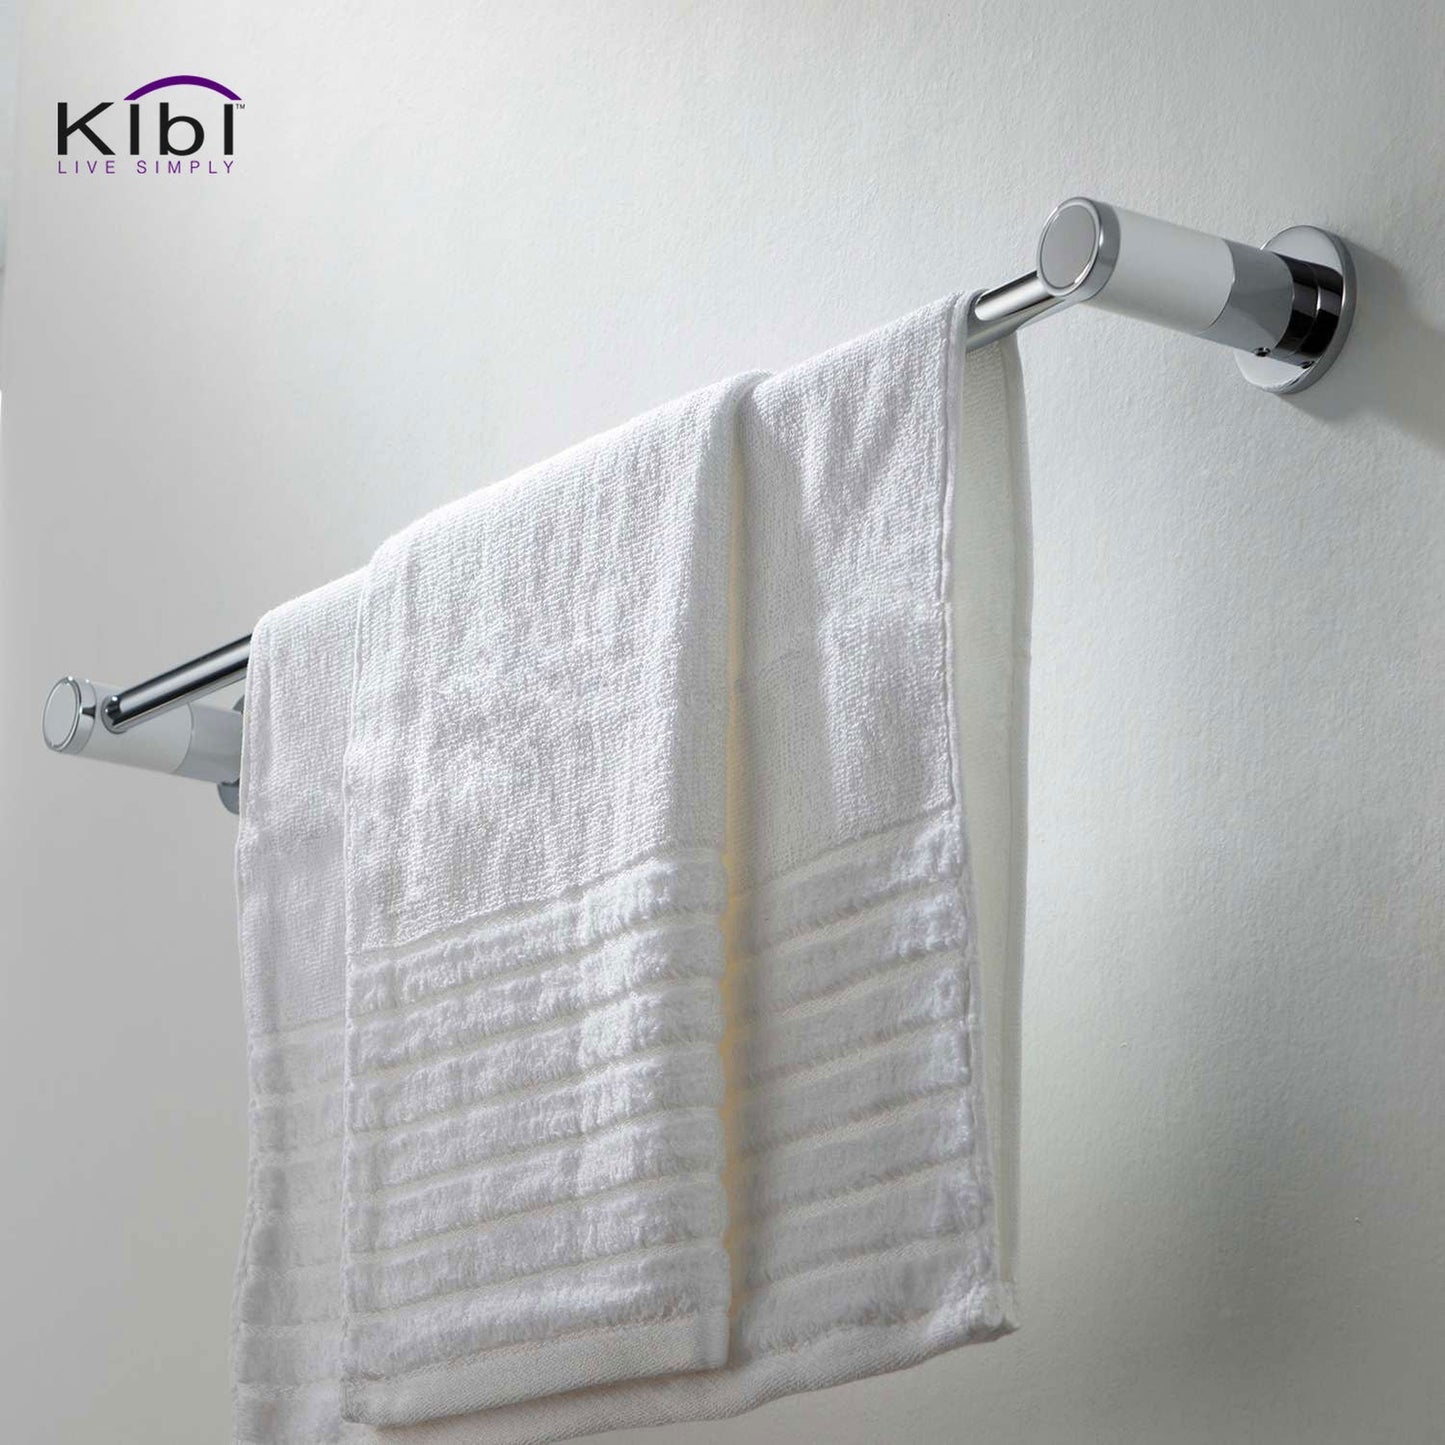 KIBI Abaco Bathroom Towel Bar in Chrome White Finish